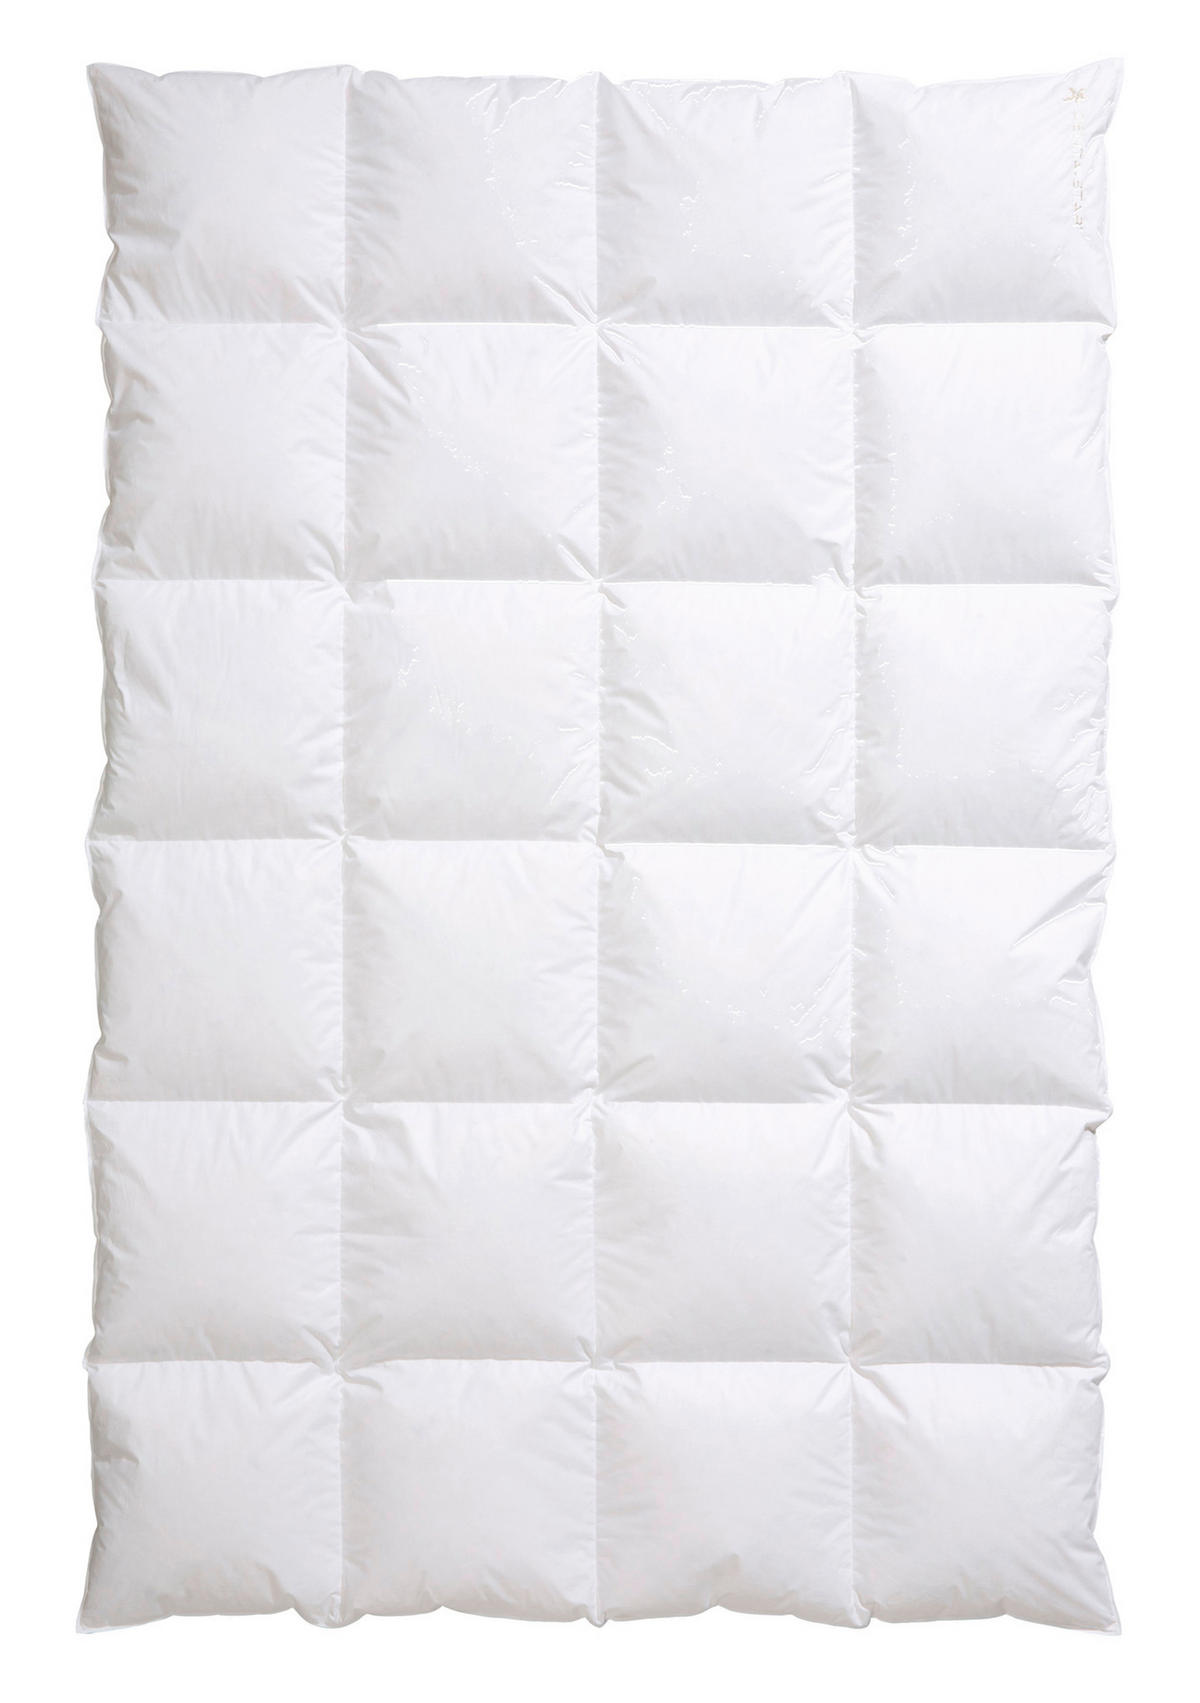 WINTERBETT  Harmony  135/200 cm   - Weiß, Basics, Textil (135/200cm) - Centa-Star